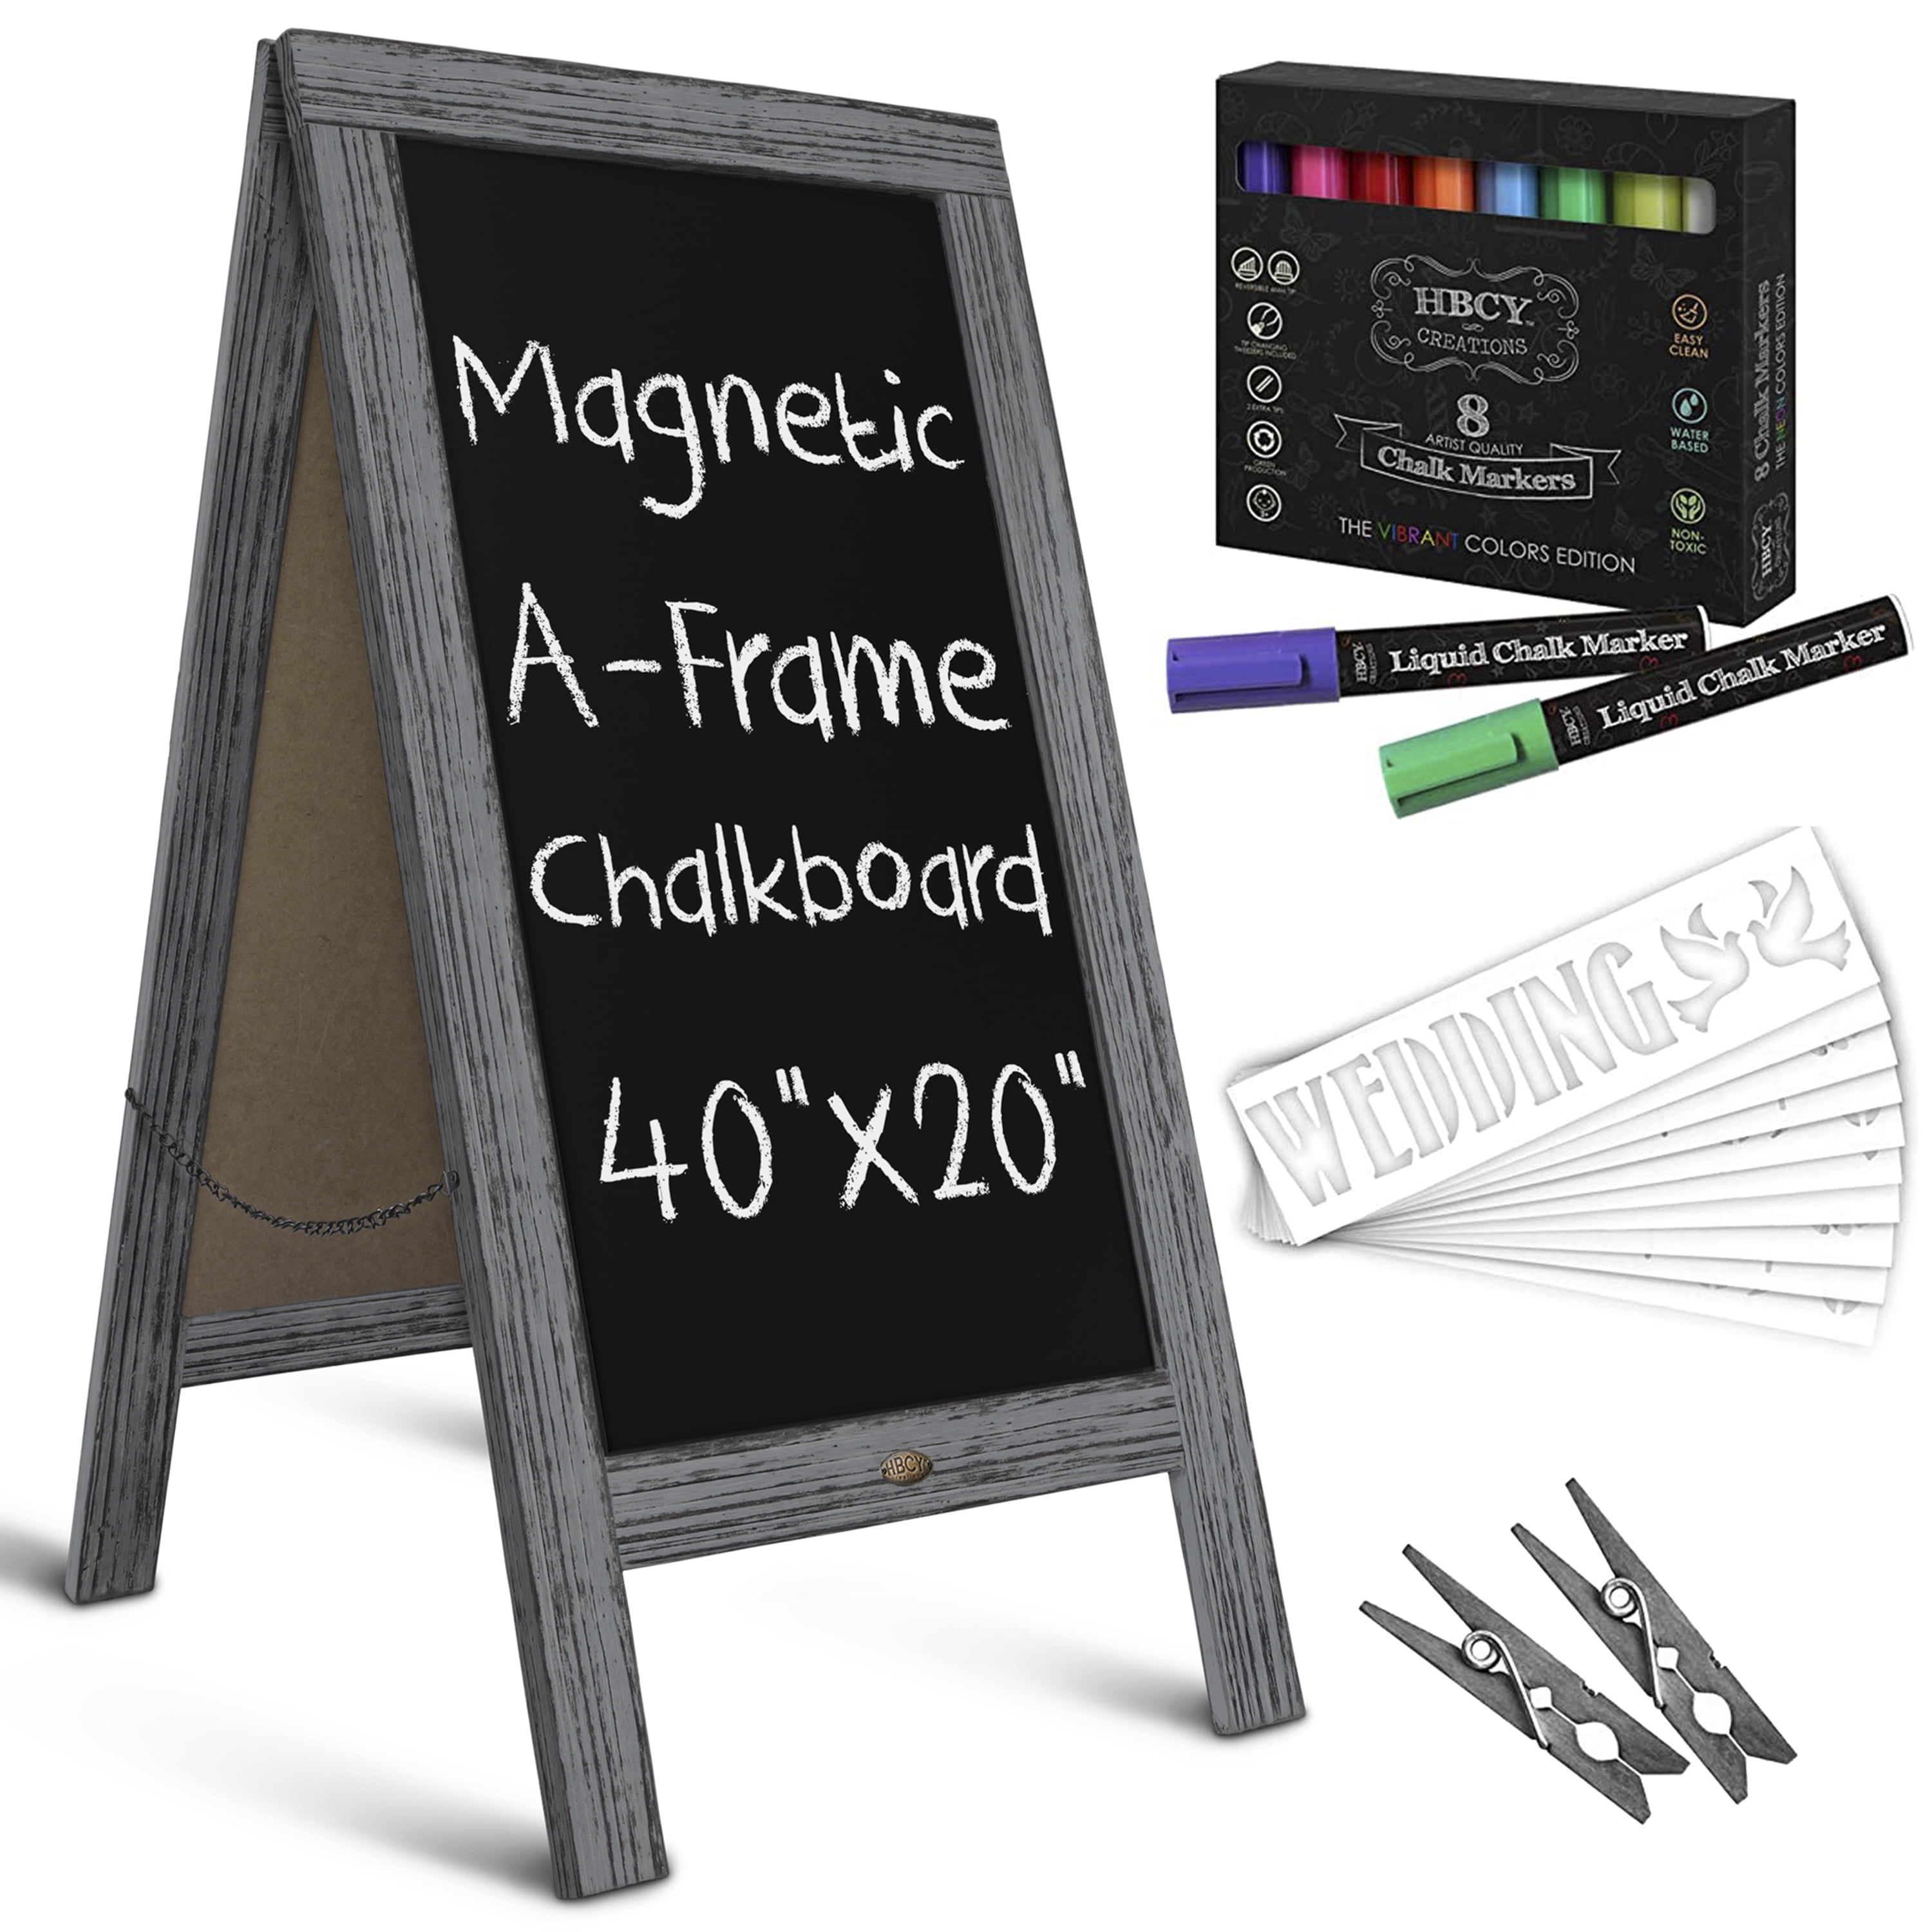 Rustic Gray A-Frame Chalkboard Deluxe Set / 8 Chalk Markers + 10 Stencils + 2 Magnets! Outdoor Sidewalk Chalkboard Sign / Large 40 x 20 Sturdy